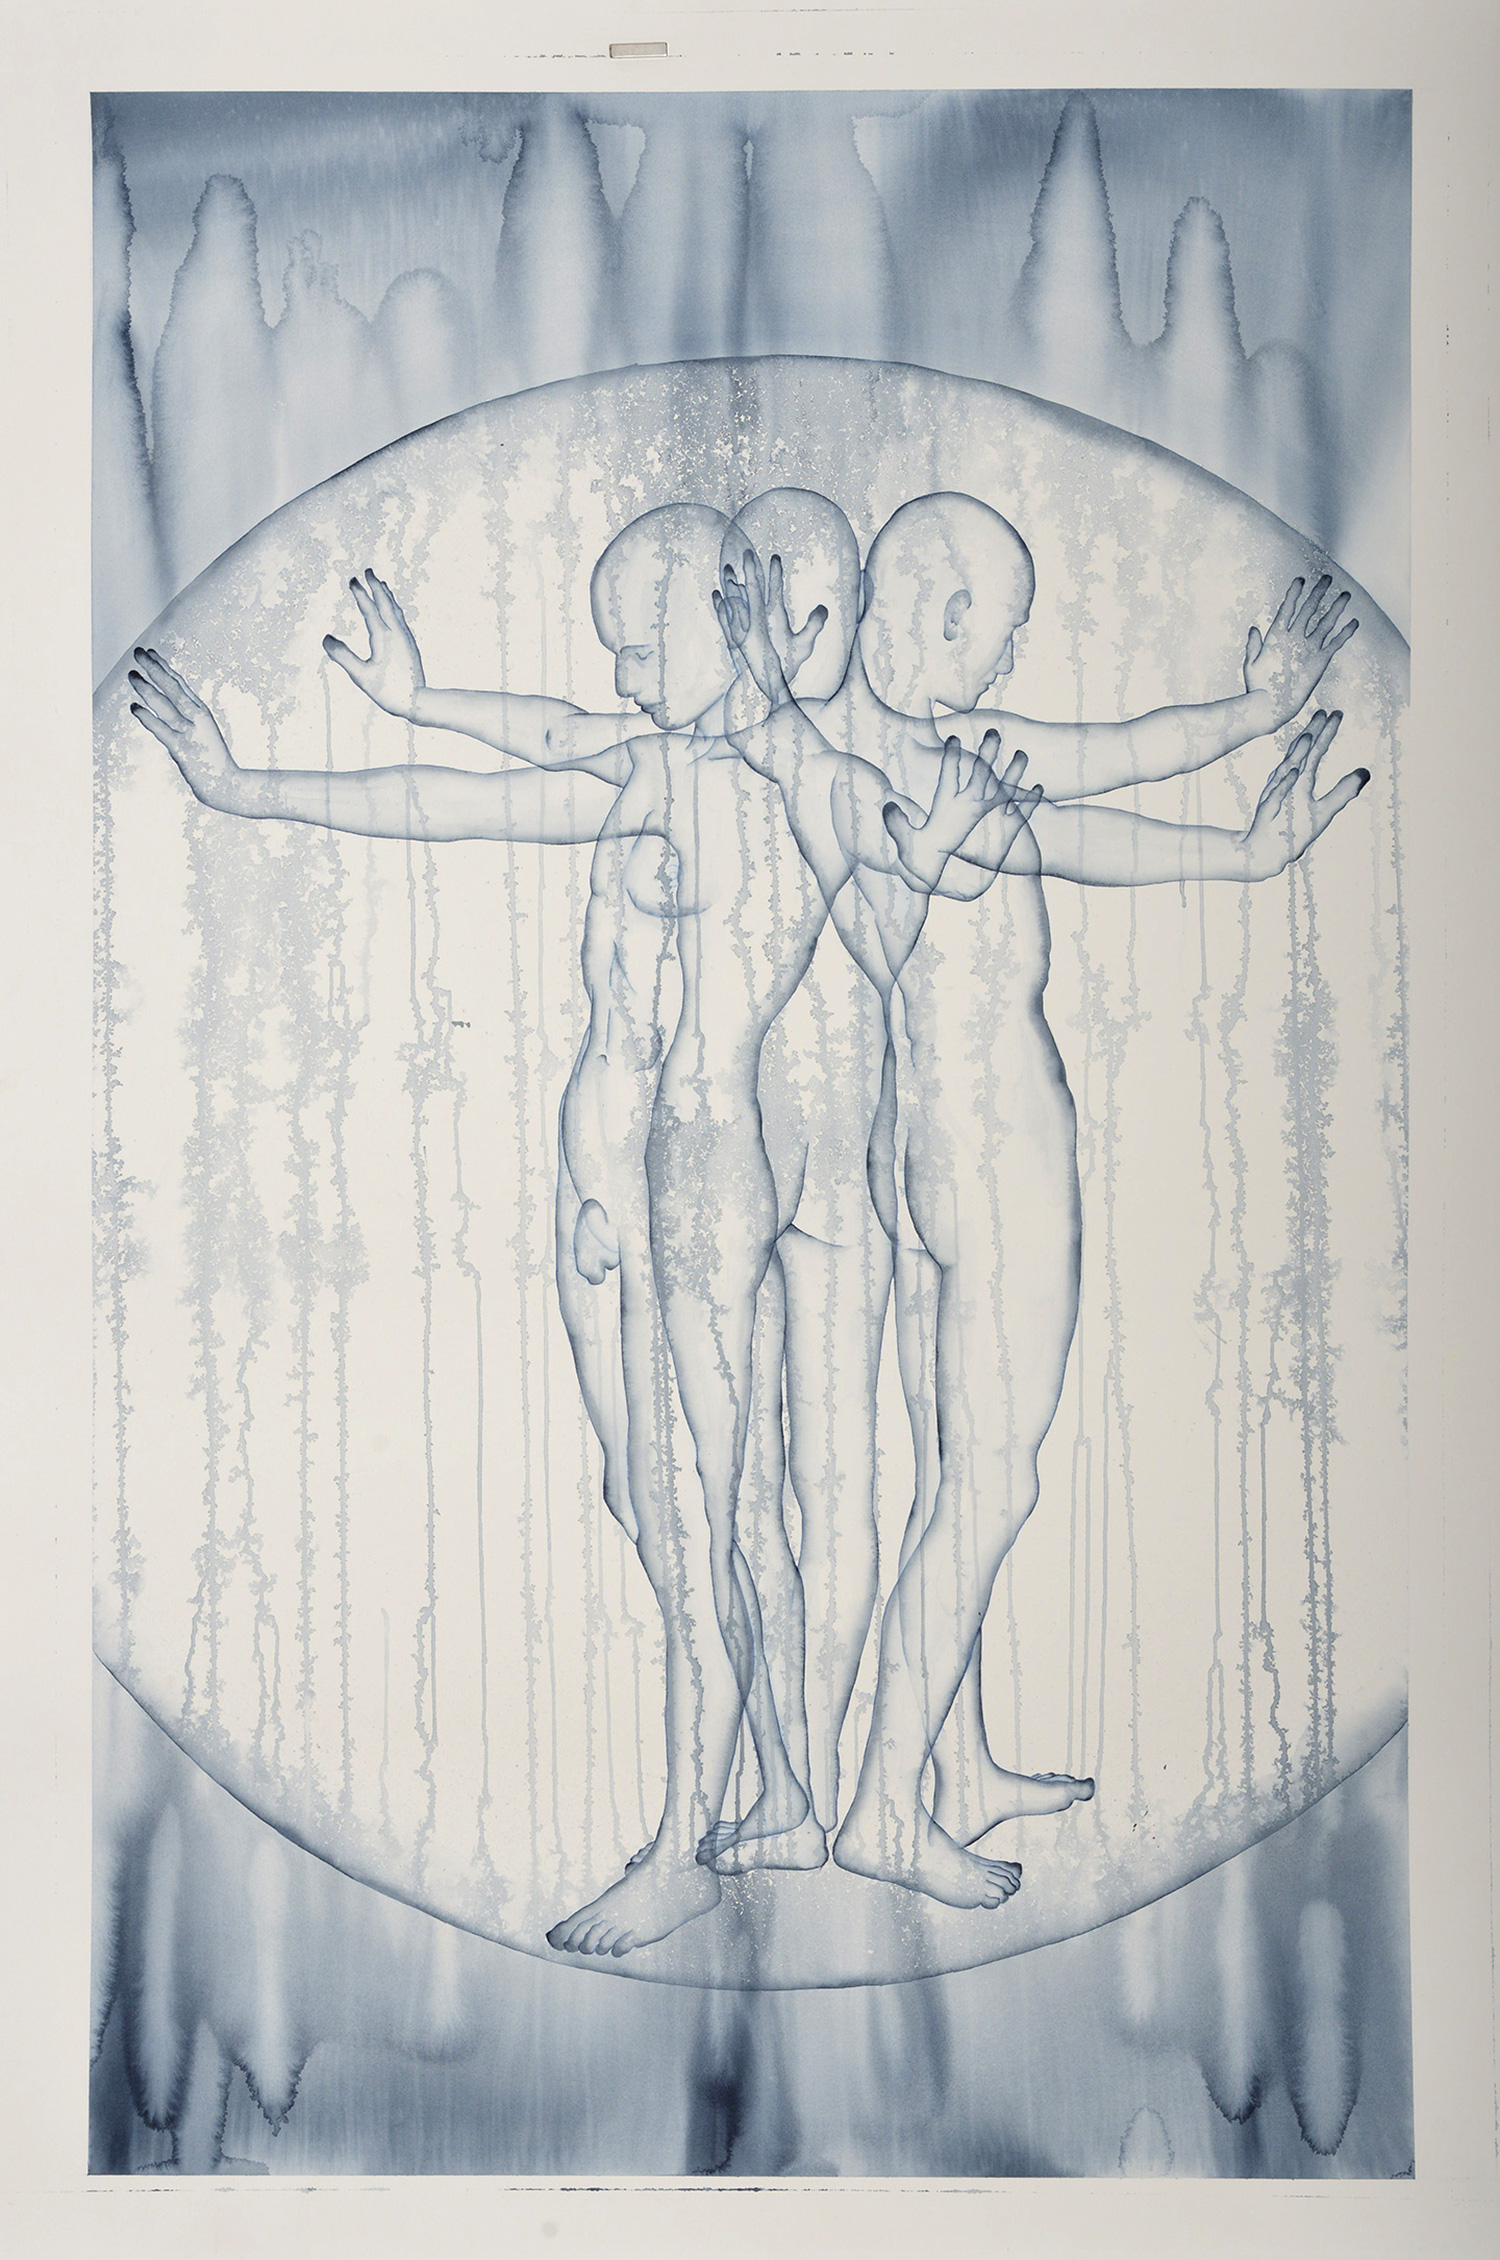 Stefano Bolzano, Aurea emotiva, acquarello su carta, 86x135 cm, 2020.